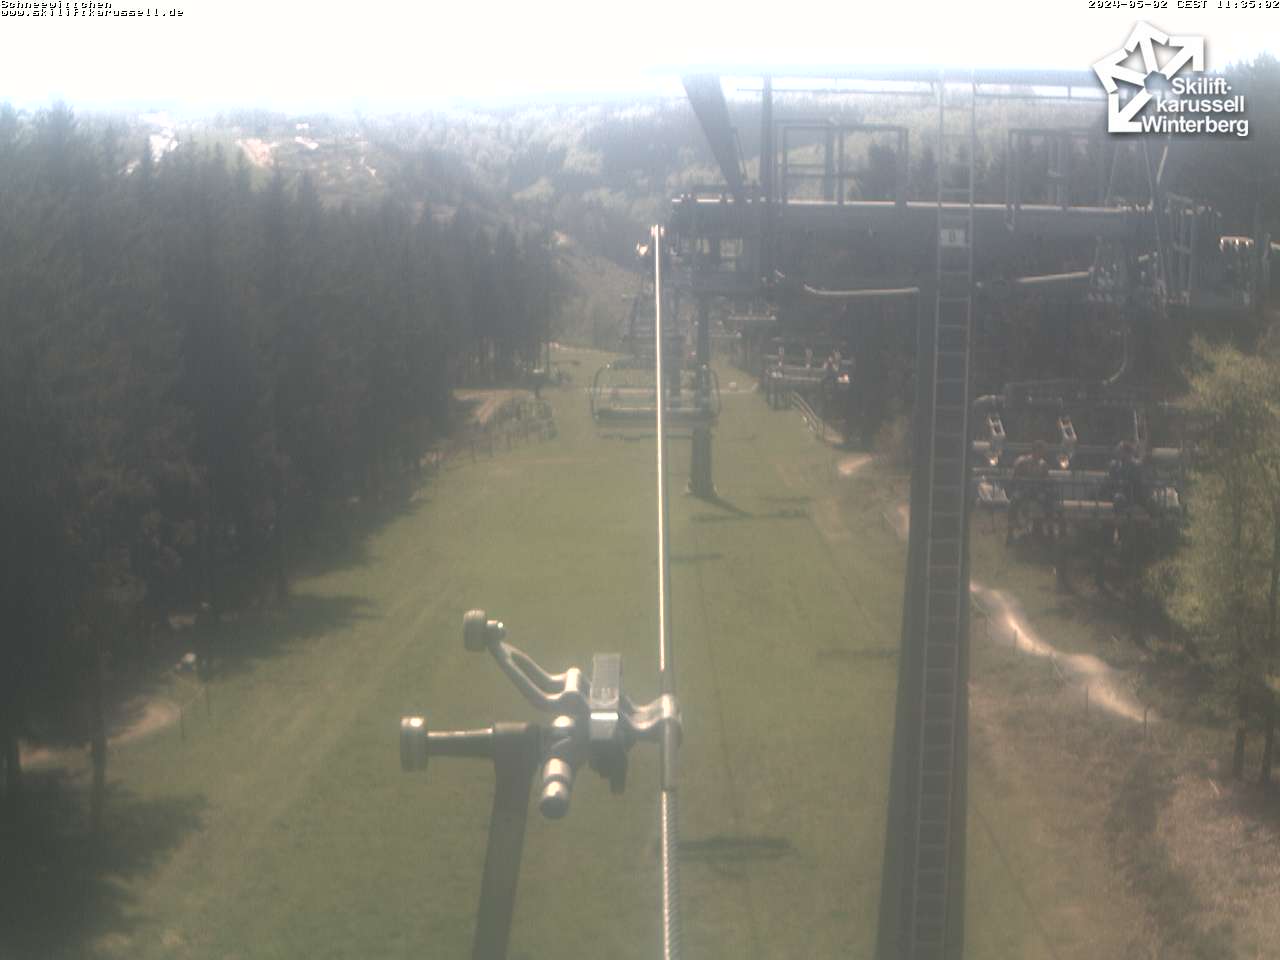 Webcam Schneewittchen - Skiliftkarussell Winterberg